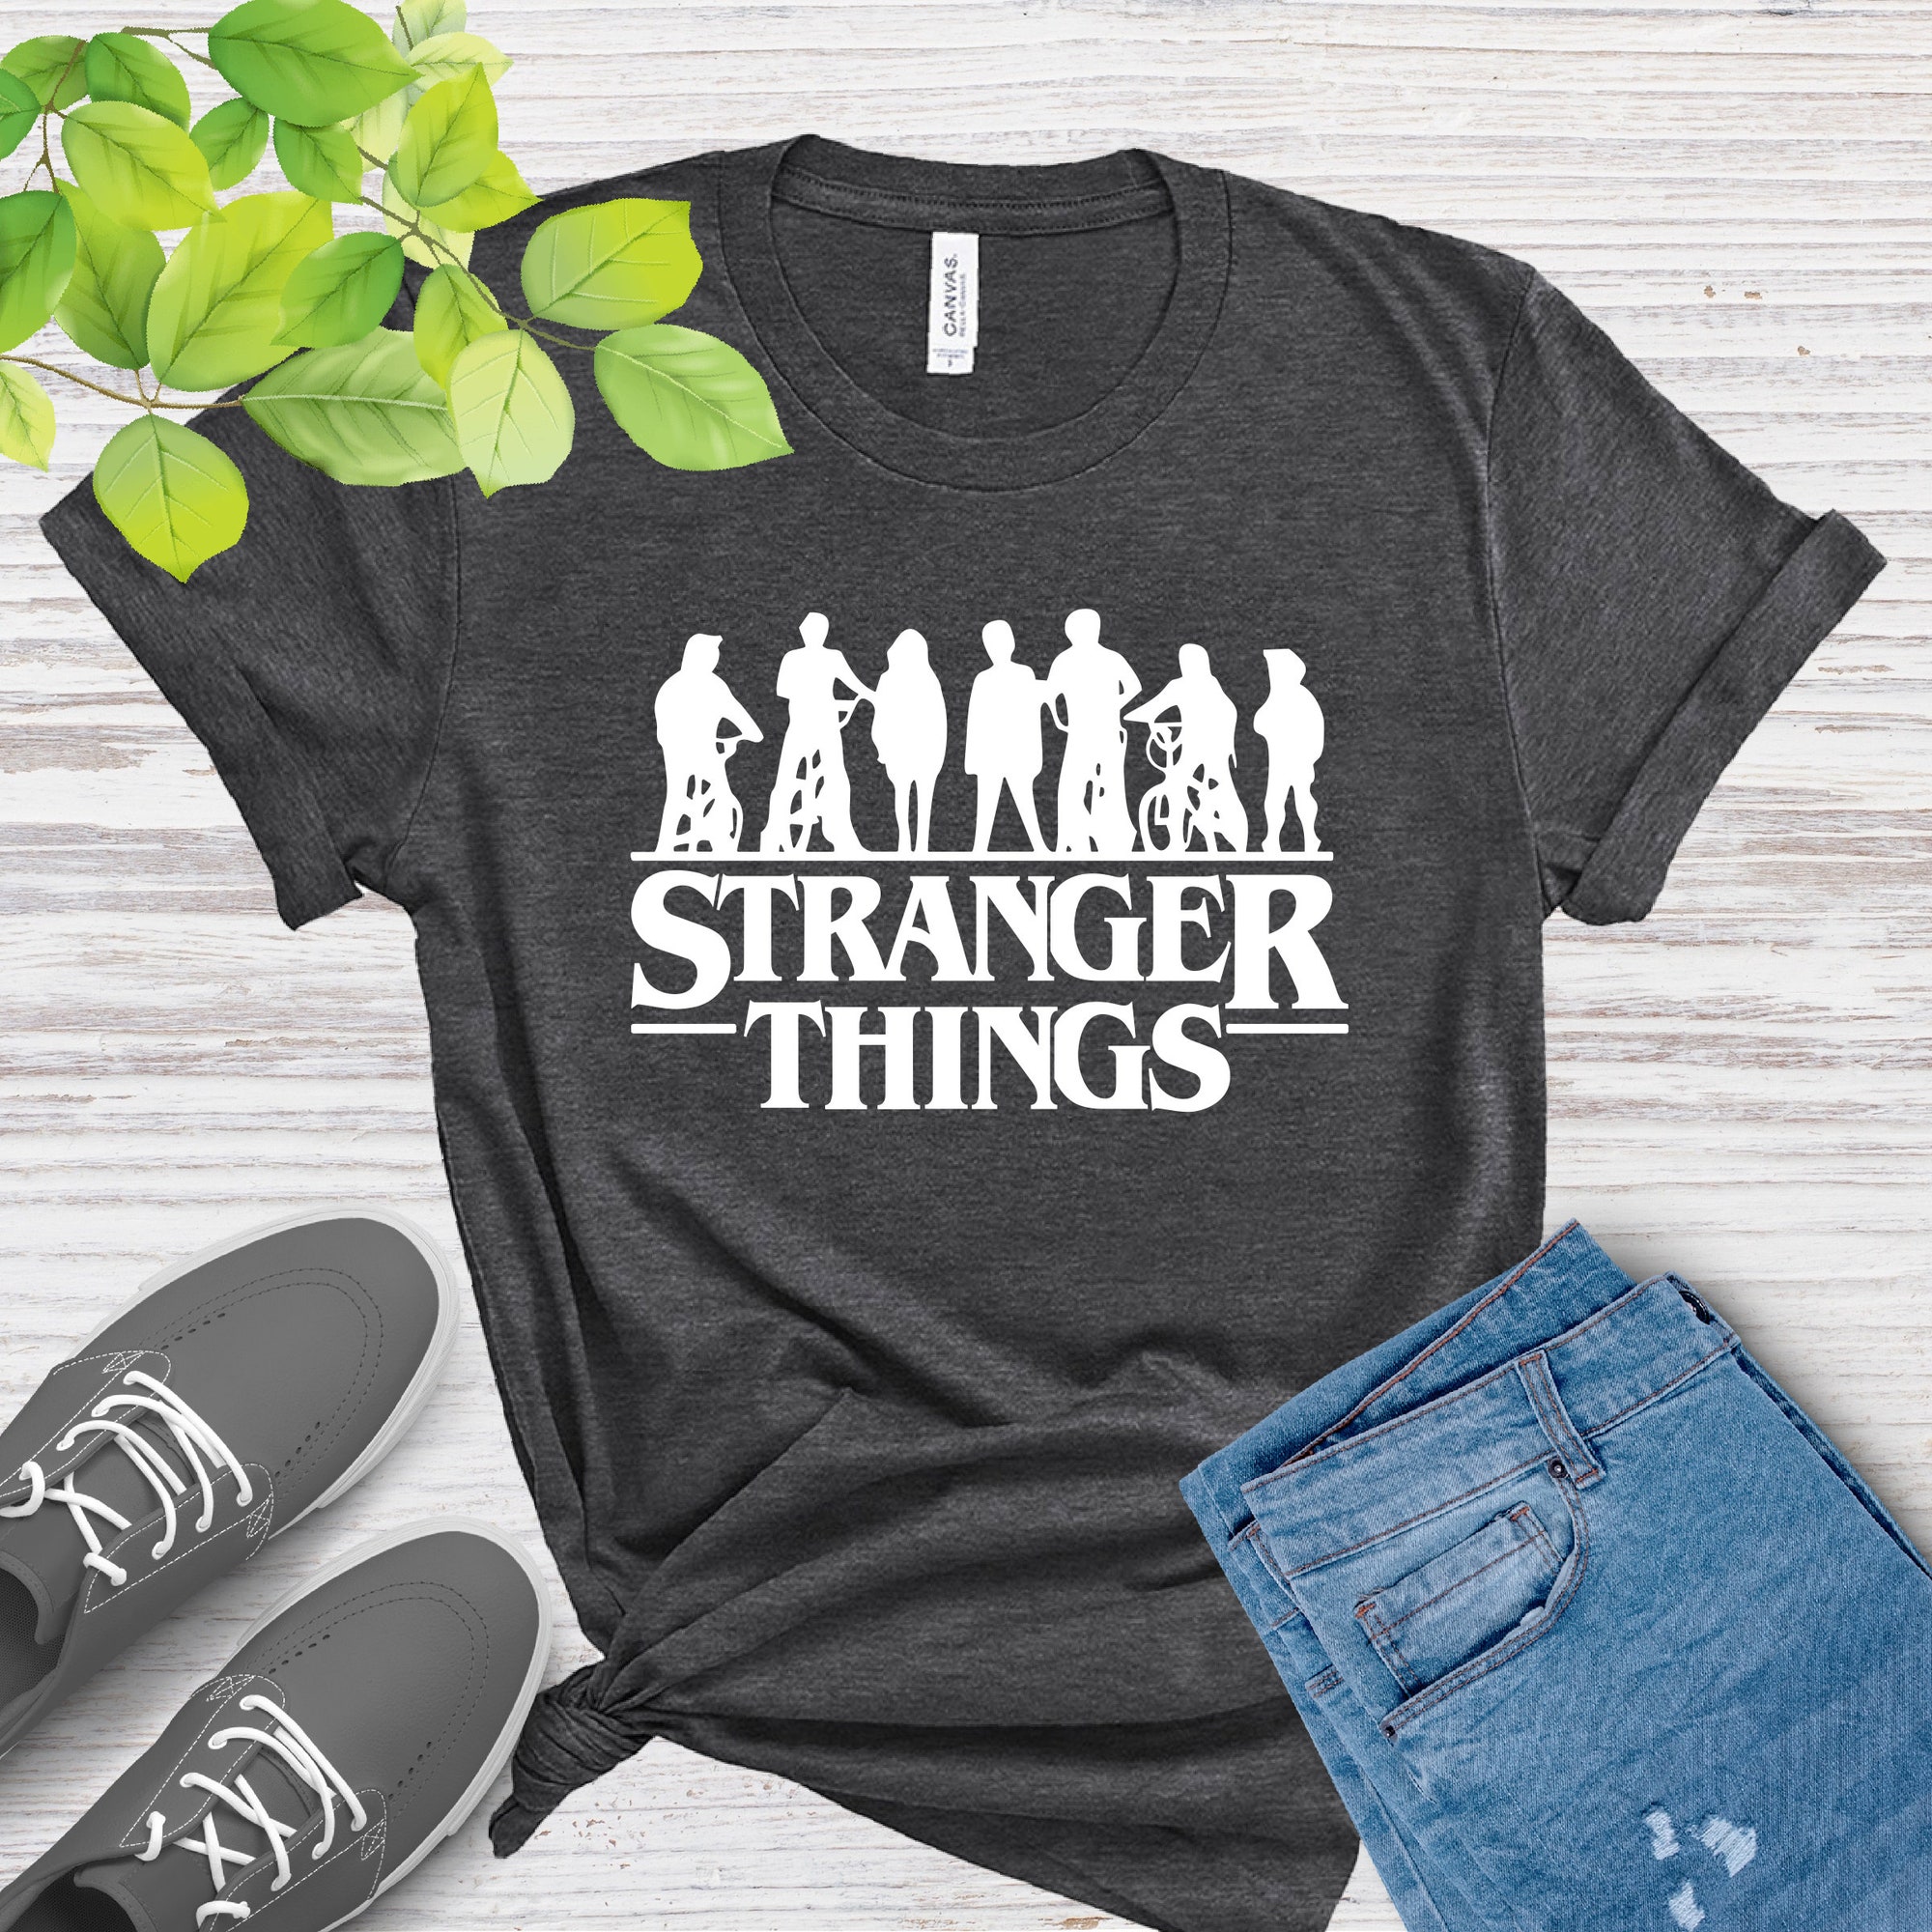 Discover Stranger Things T-shirt